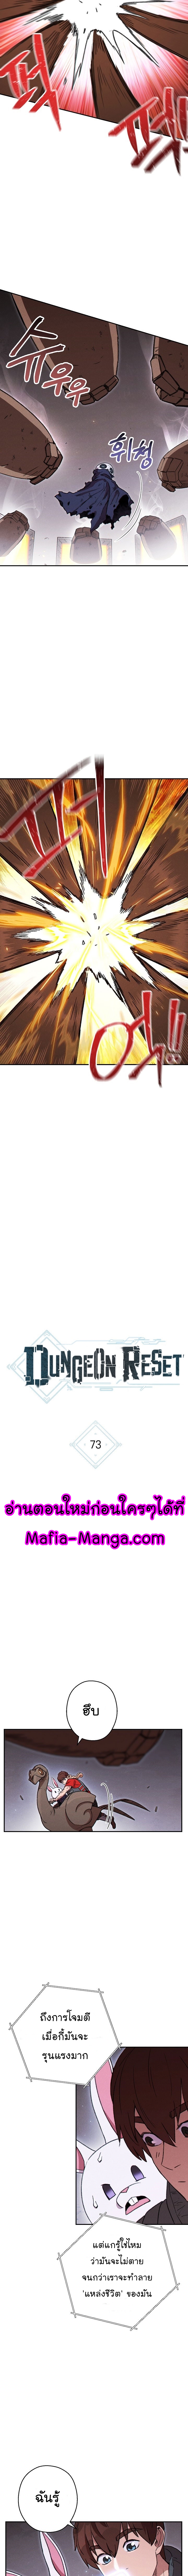 Dungeon Reset 73 02